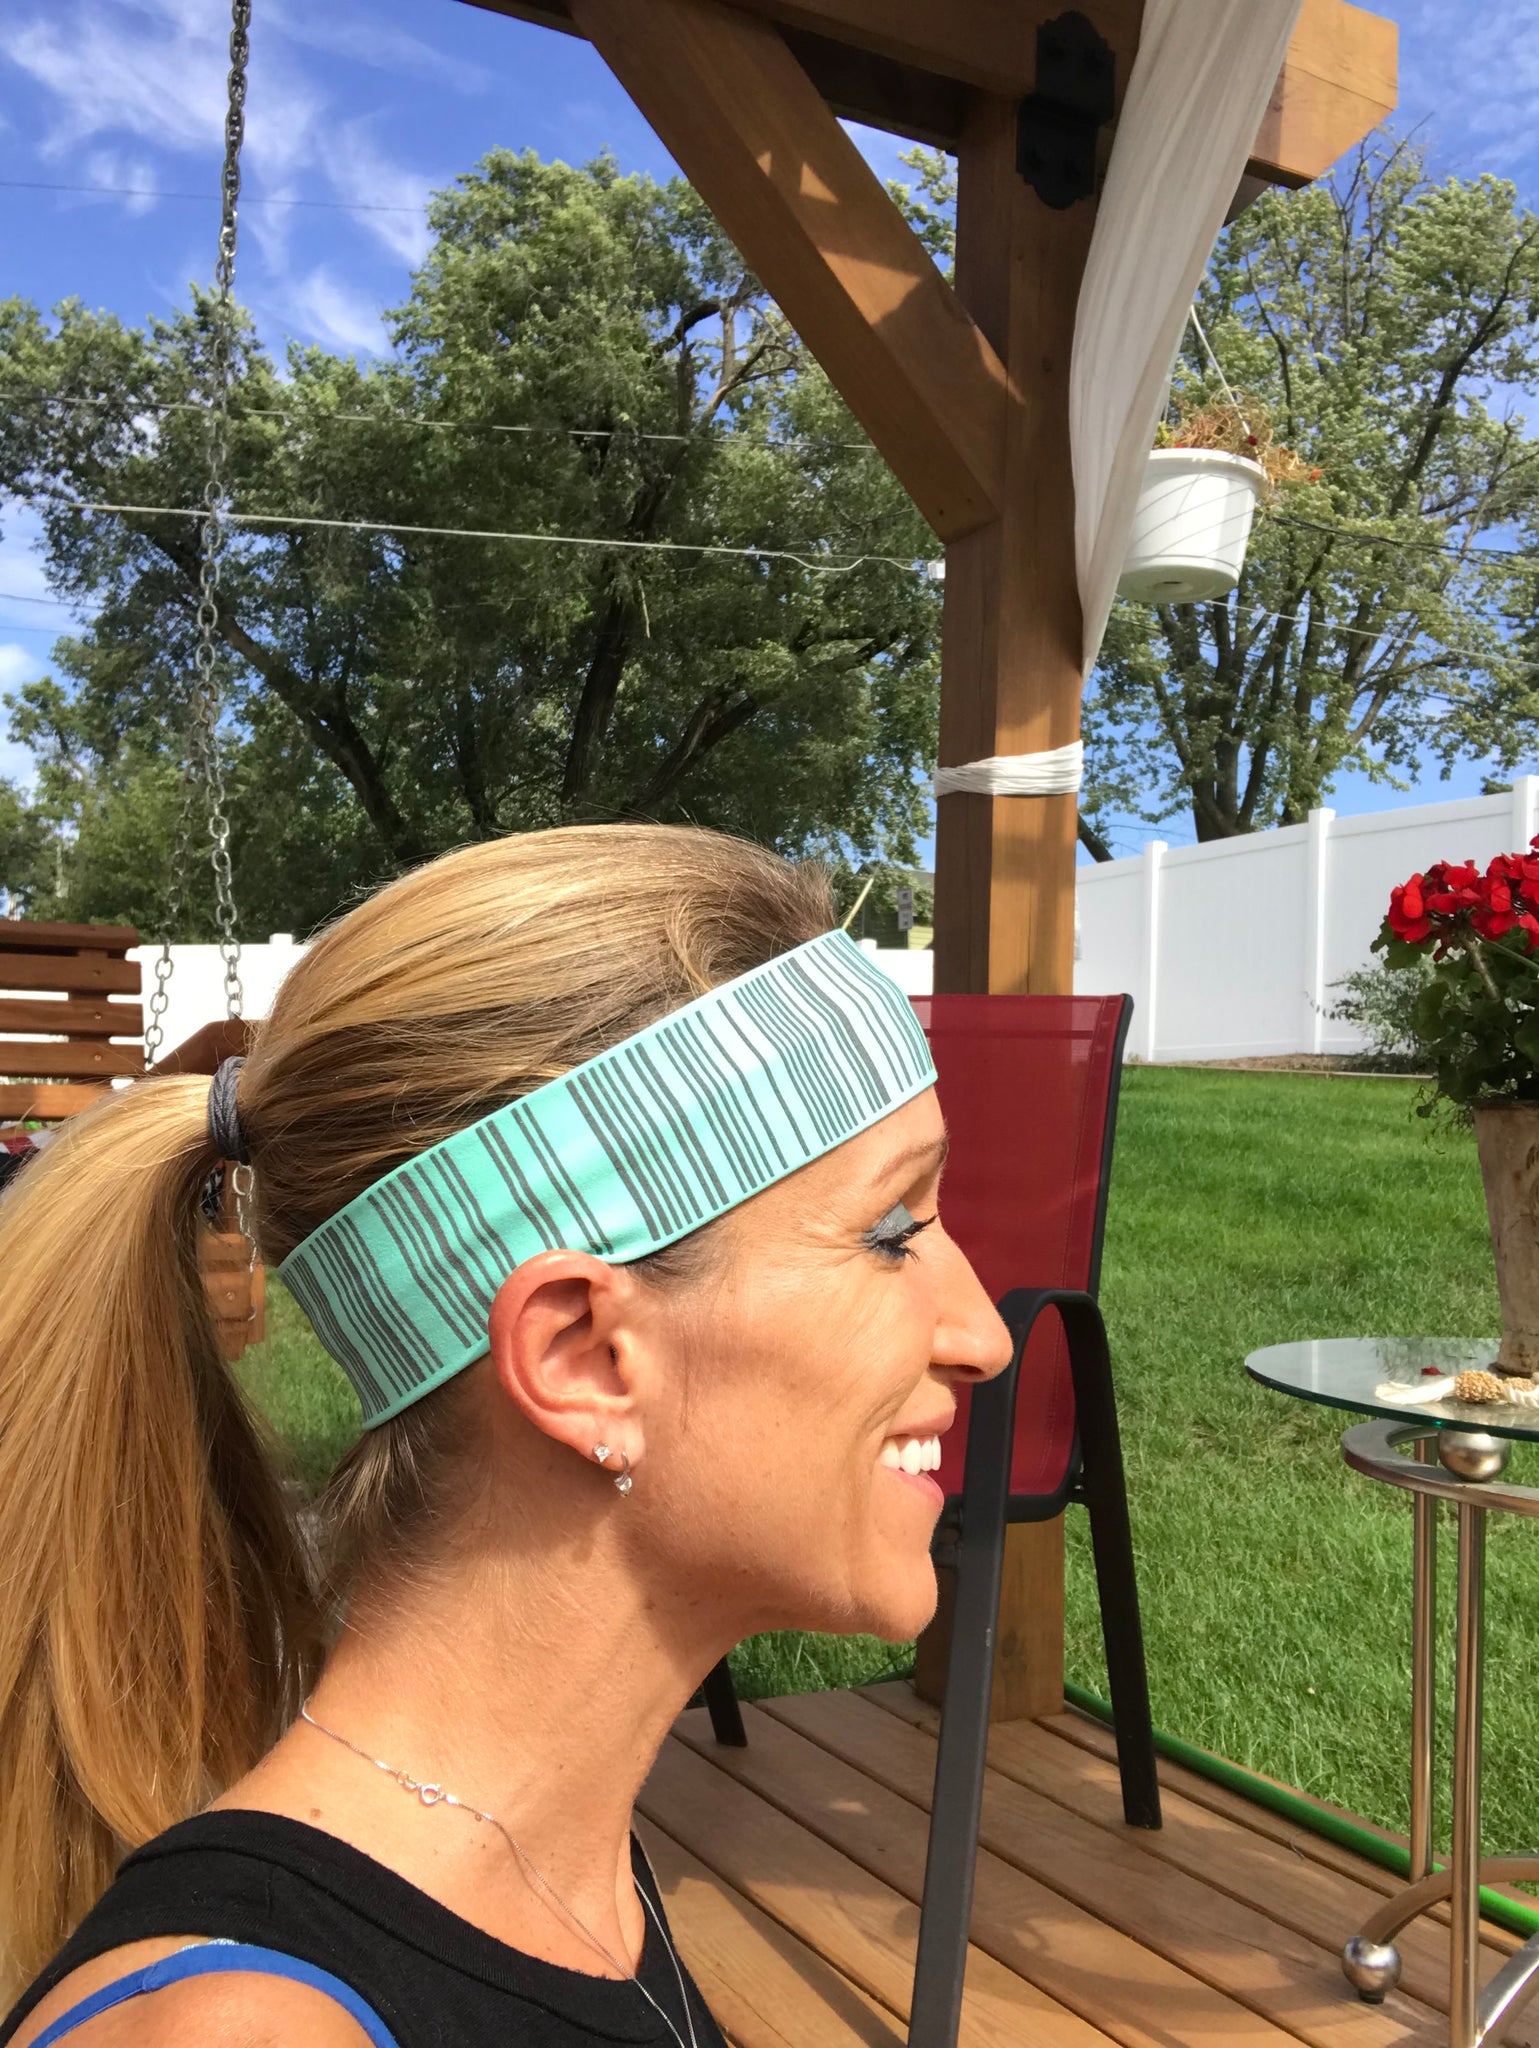 Non-Slip Headbands for Sports & Athletes